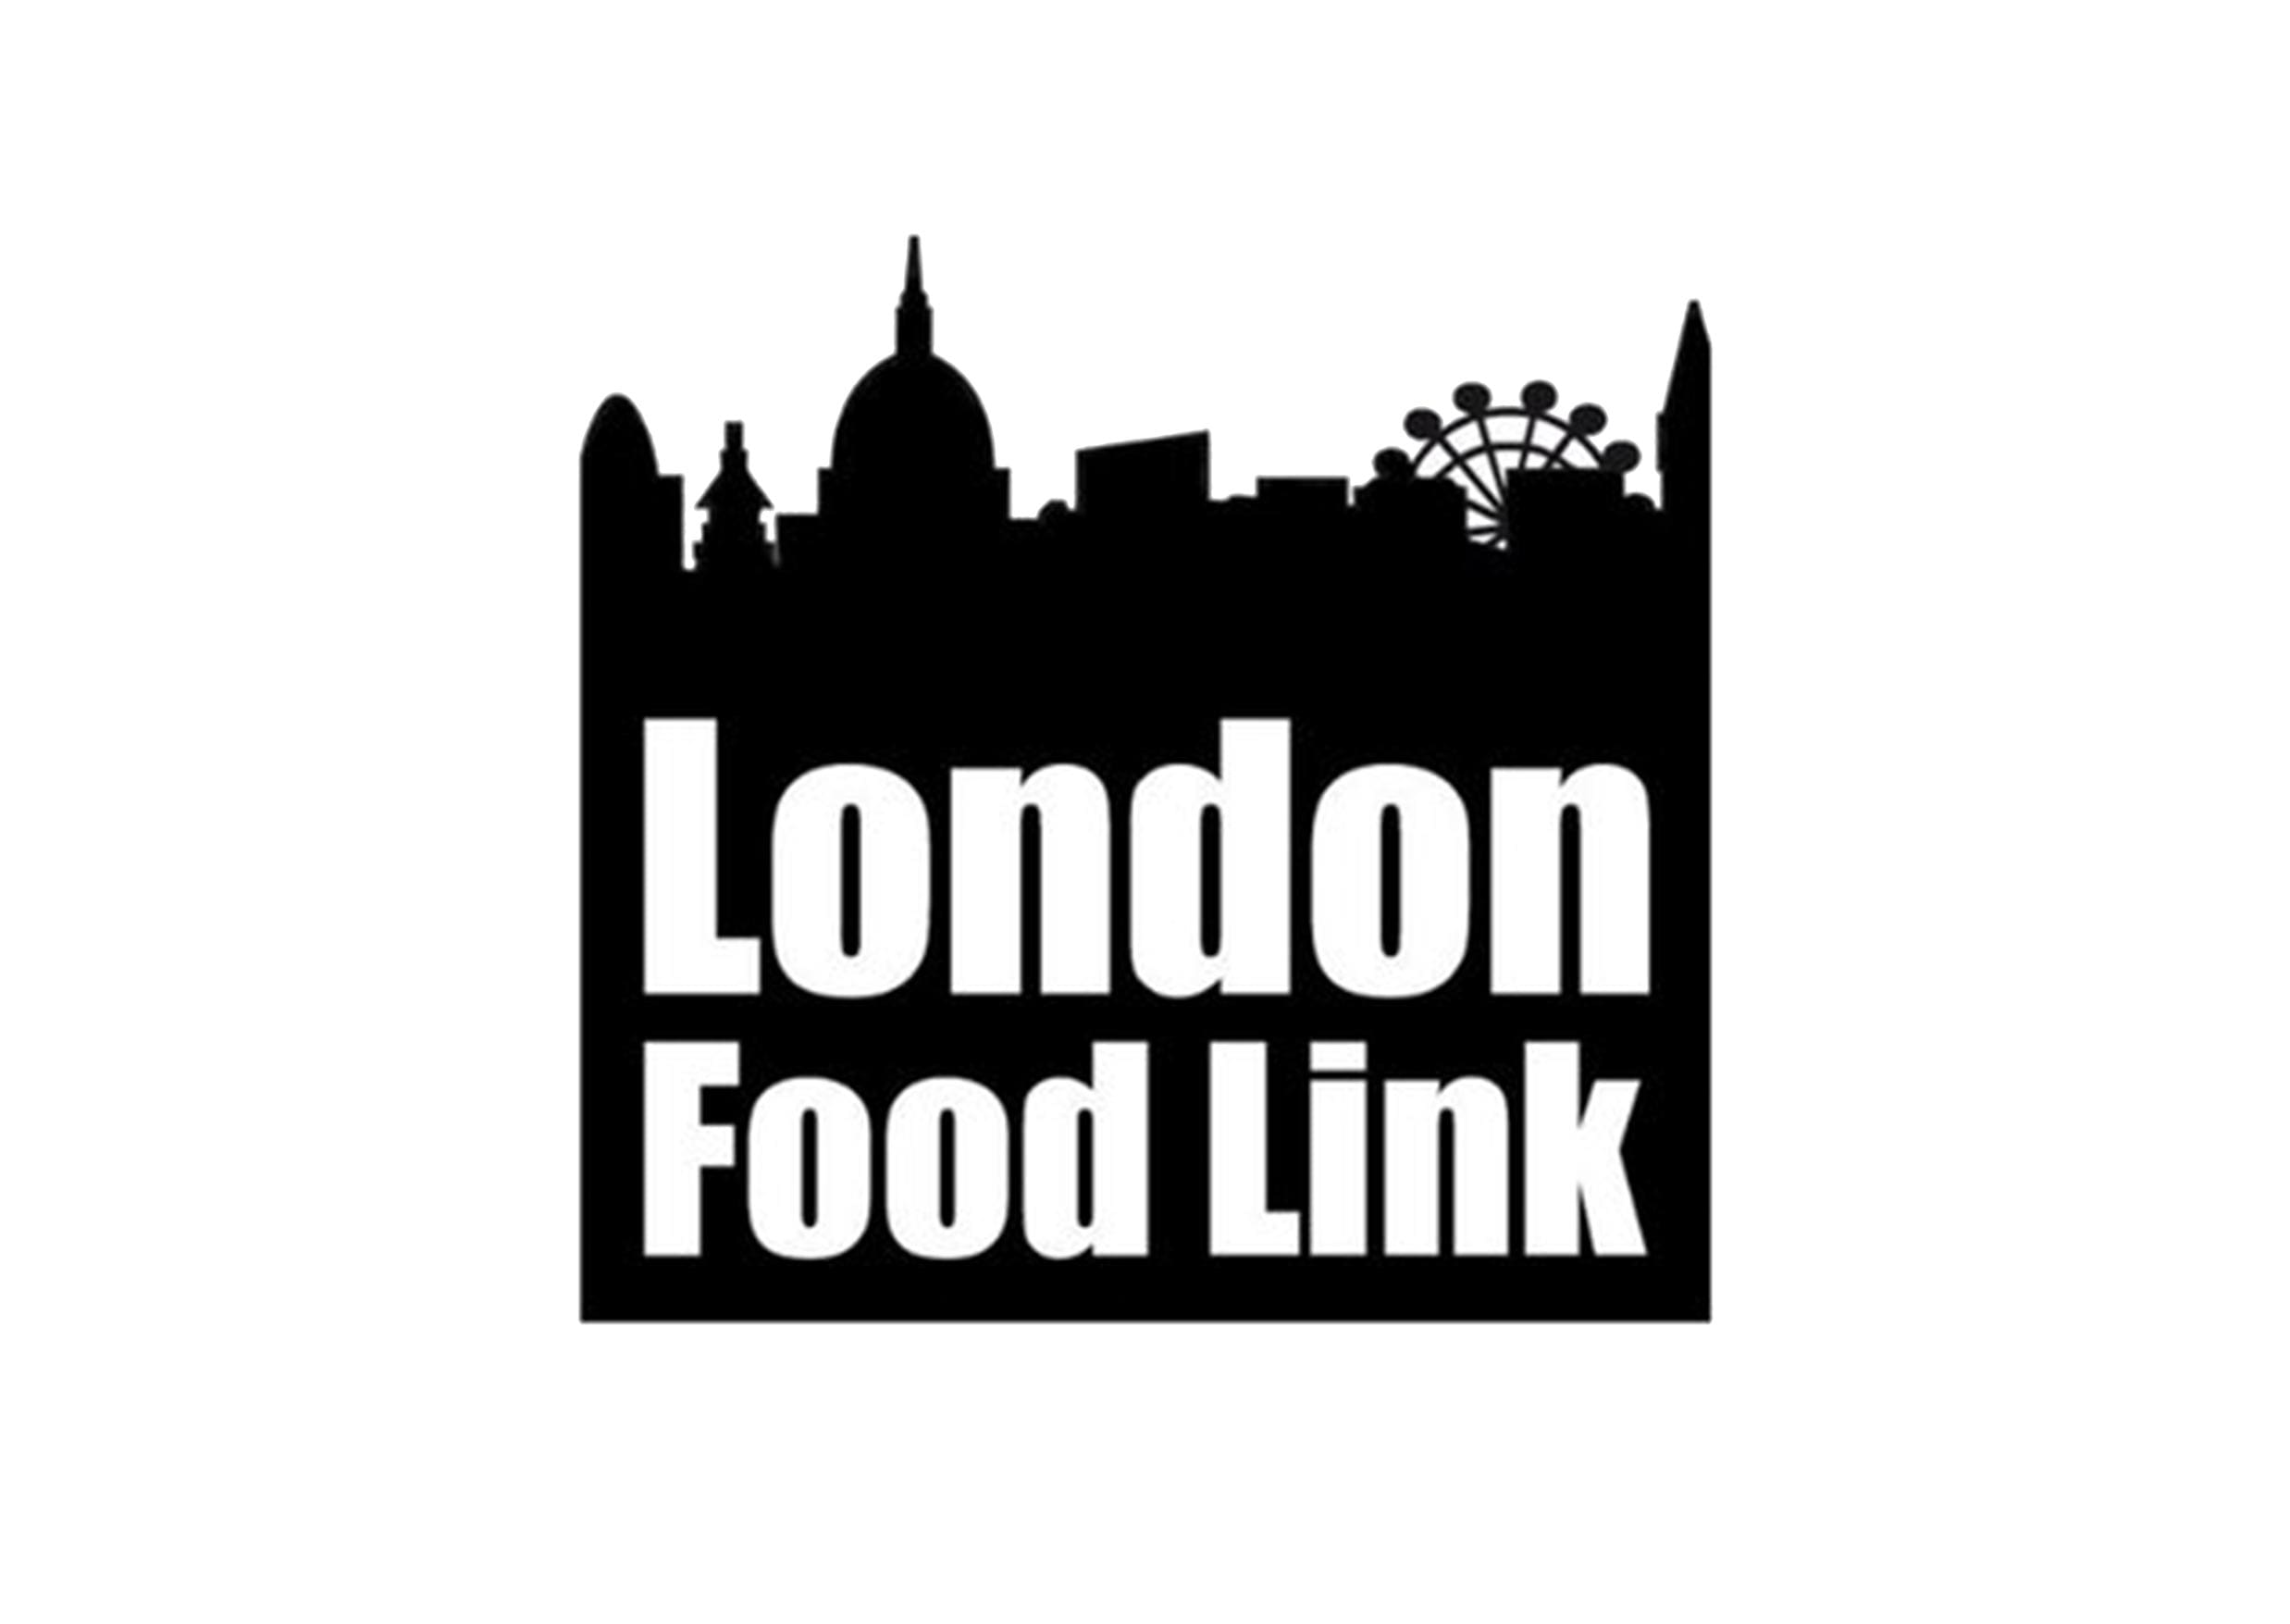 17. London Food Link